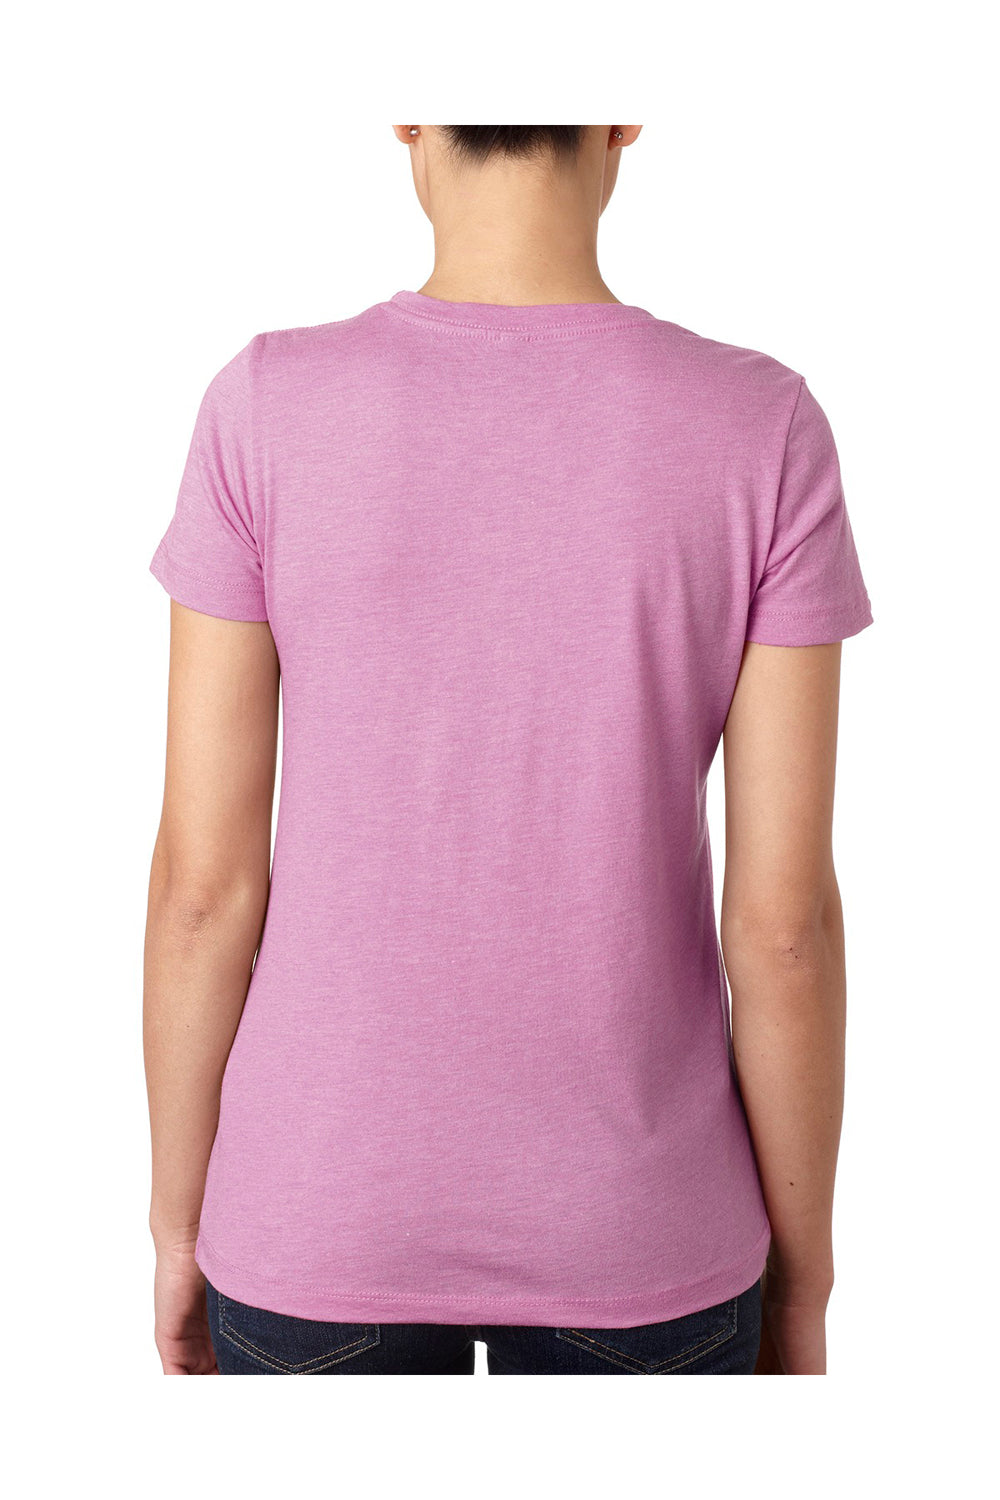 Next Level 6710 Womens Jersey Short Sleeve Crewneck T-Shirt Lilac Pink Back